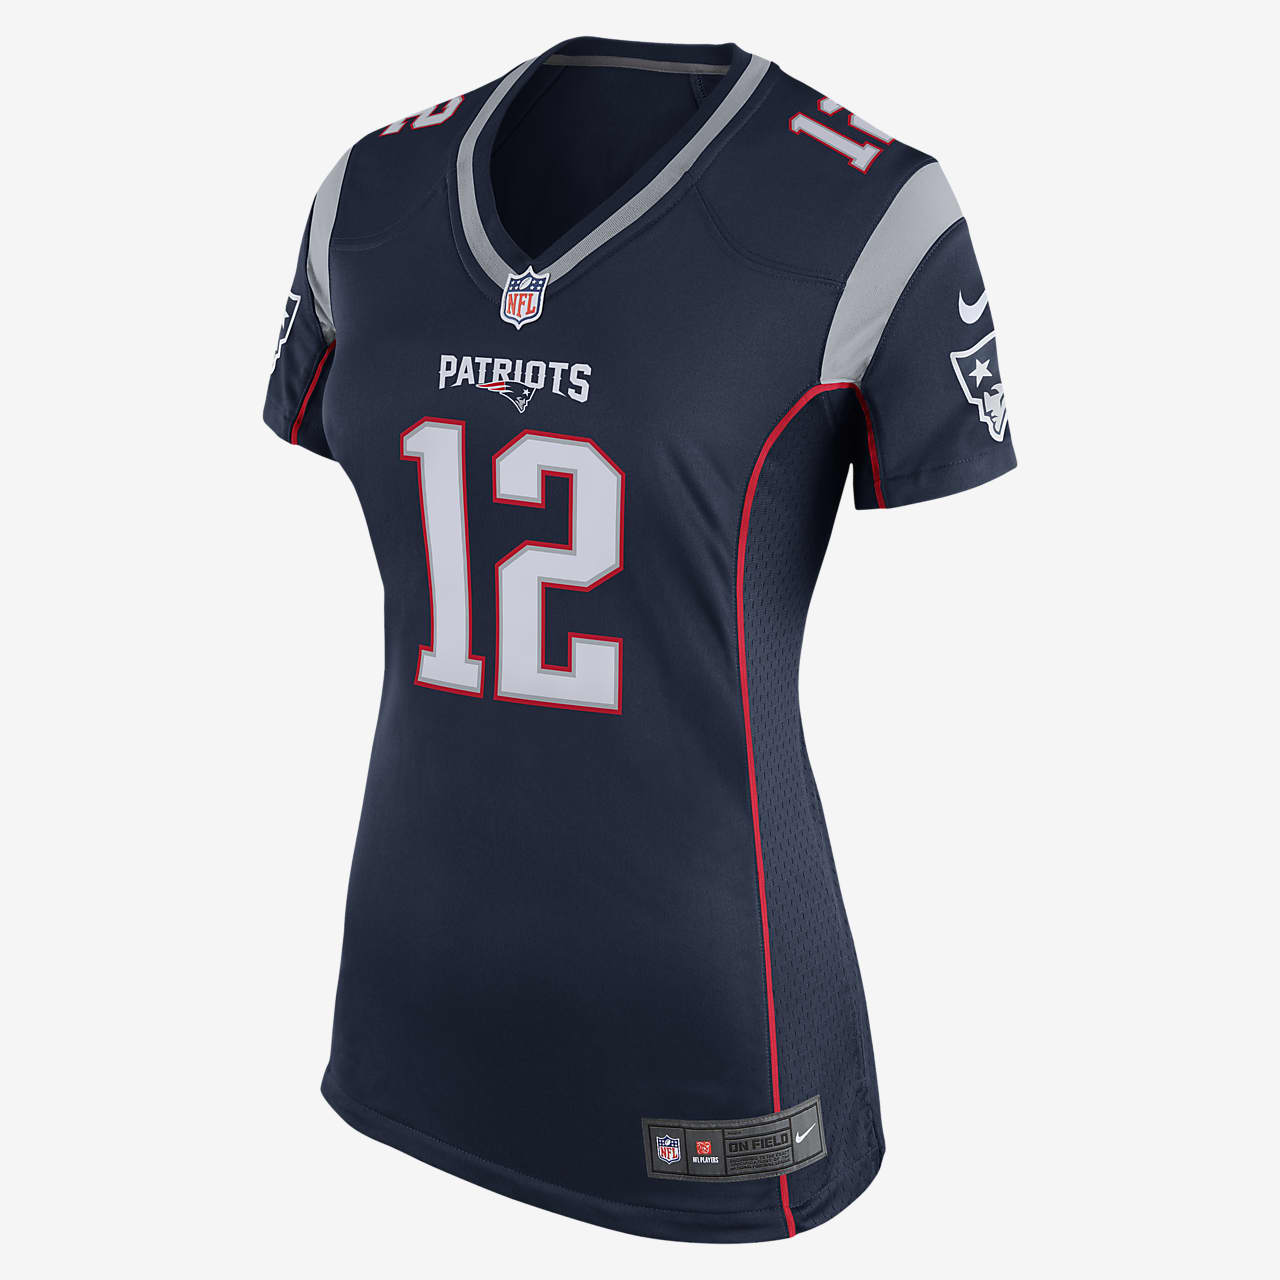 NFL New England Patriots (Tom Brady) Women's American Football Home Game Jersey